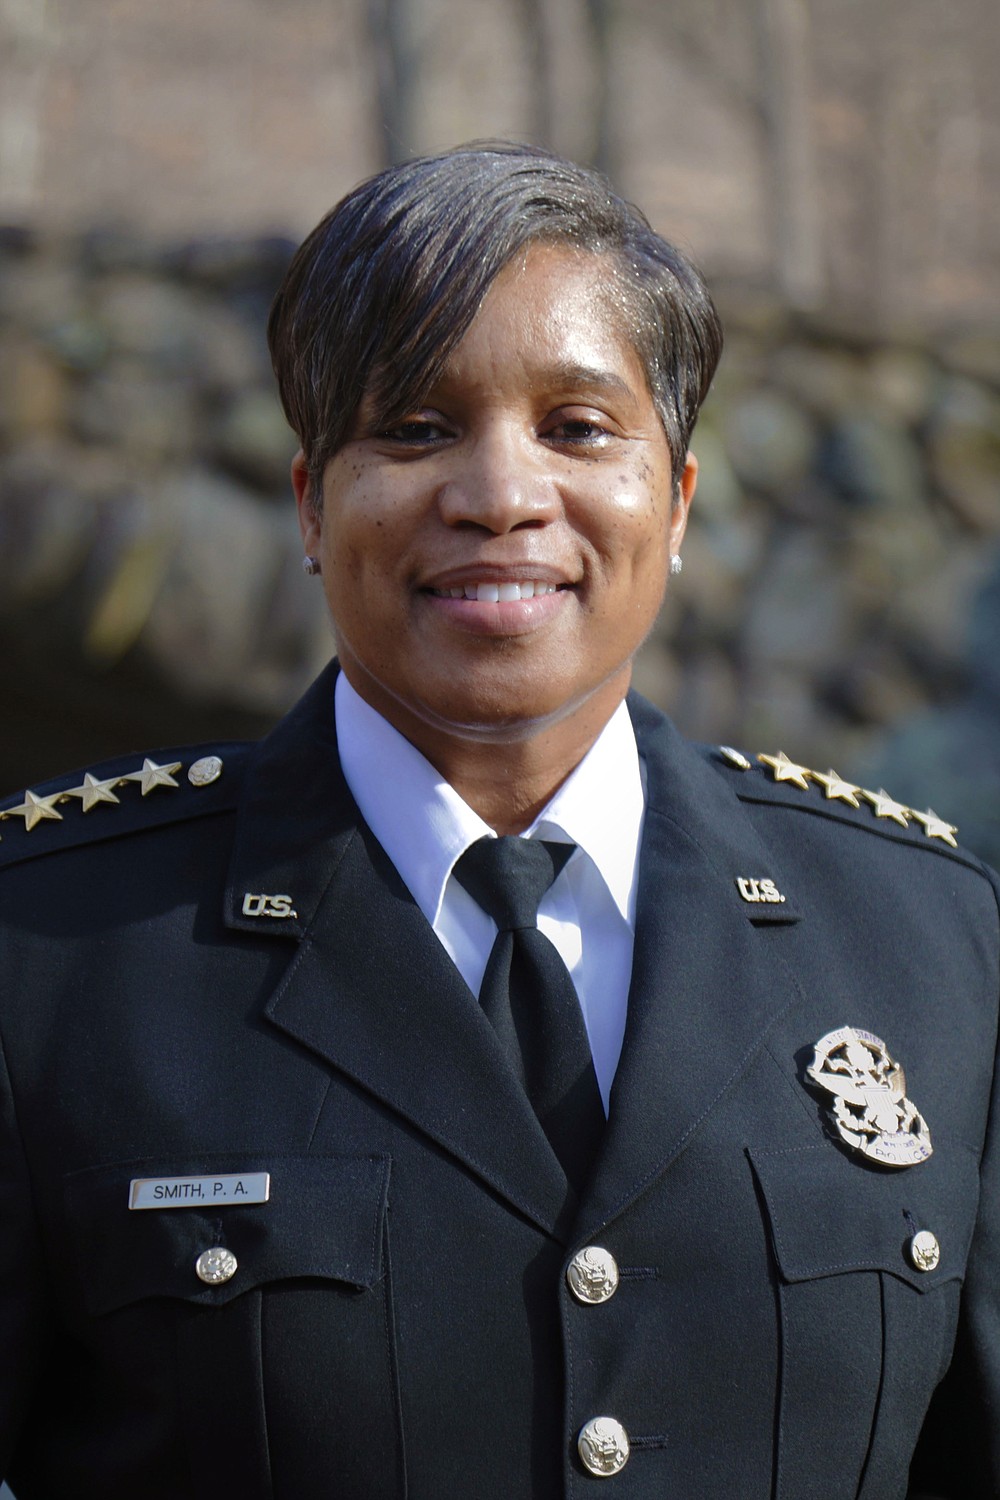 U.S. Park Police Chief Pamela Smith. (National Park Service)